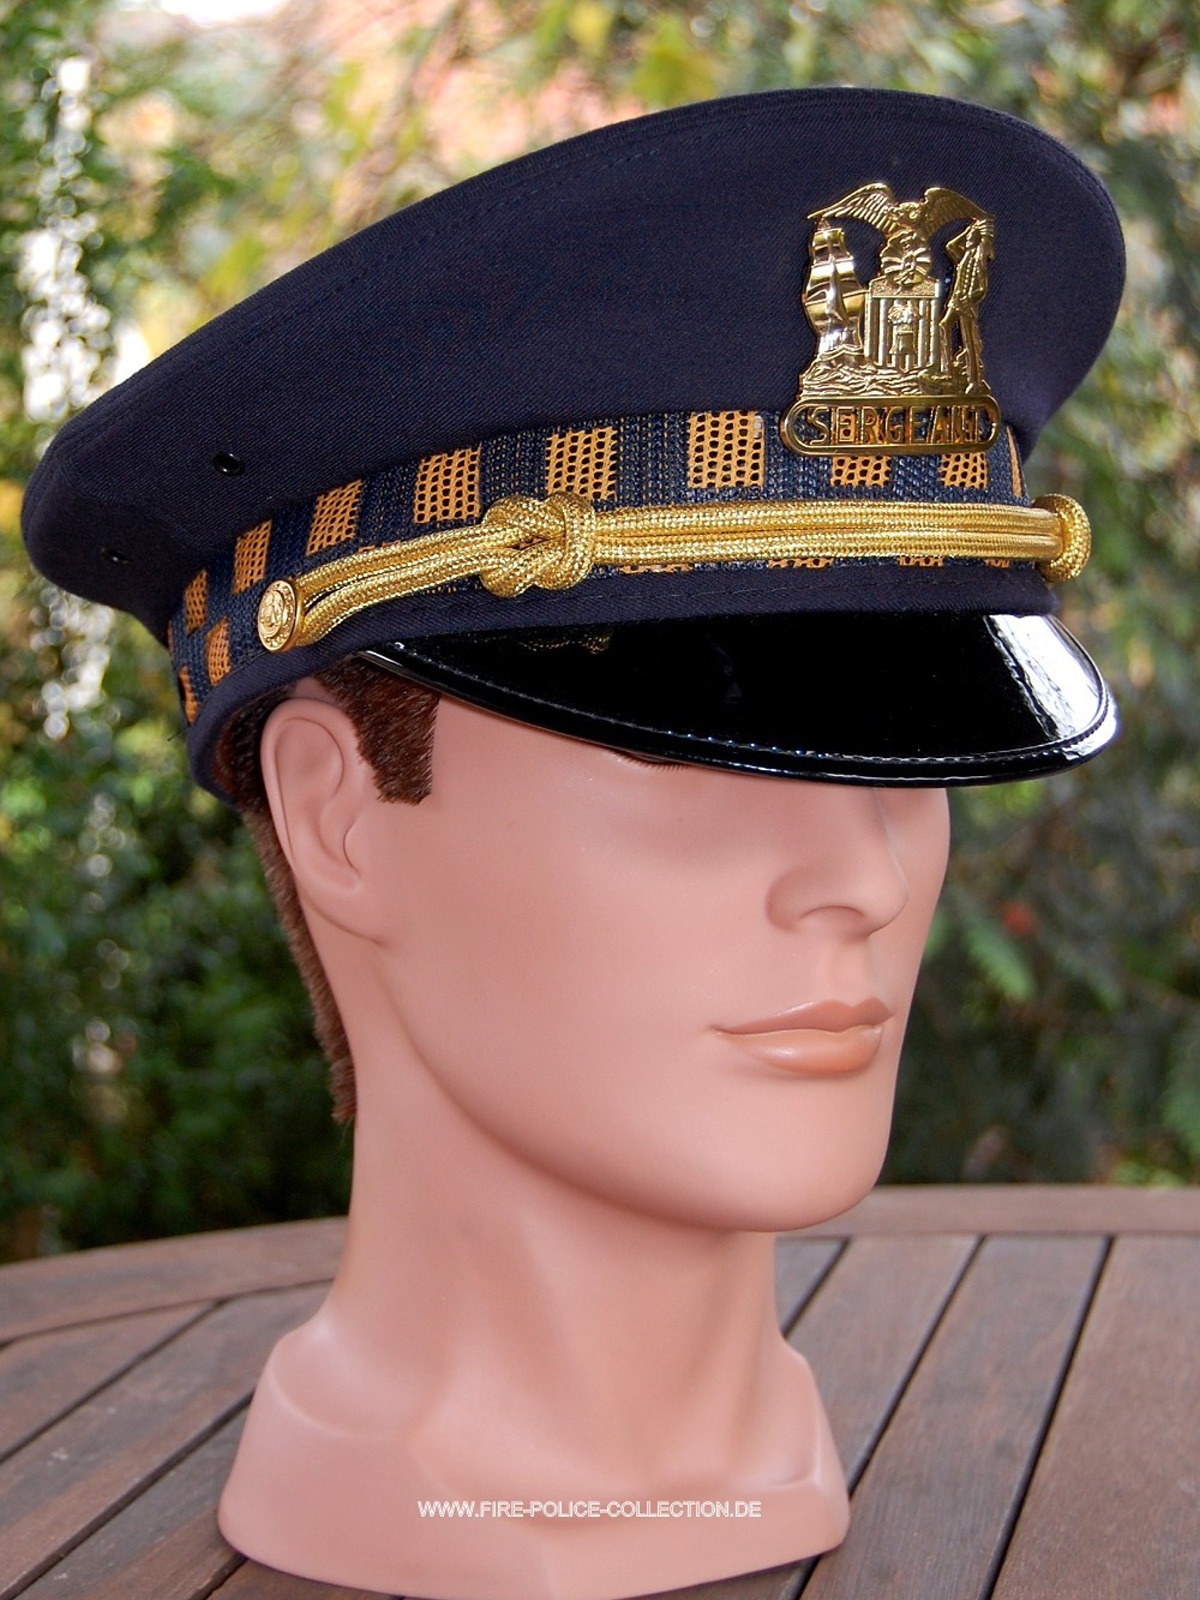 Sergeant Hat